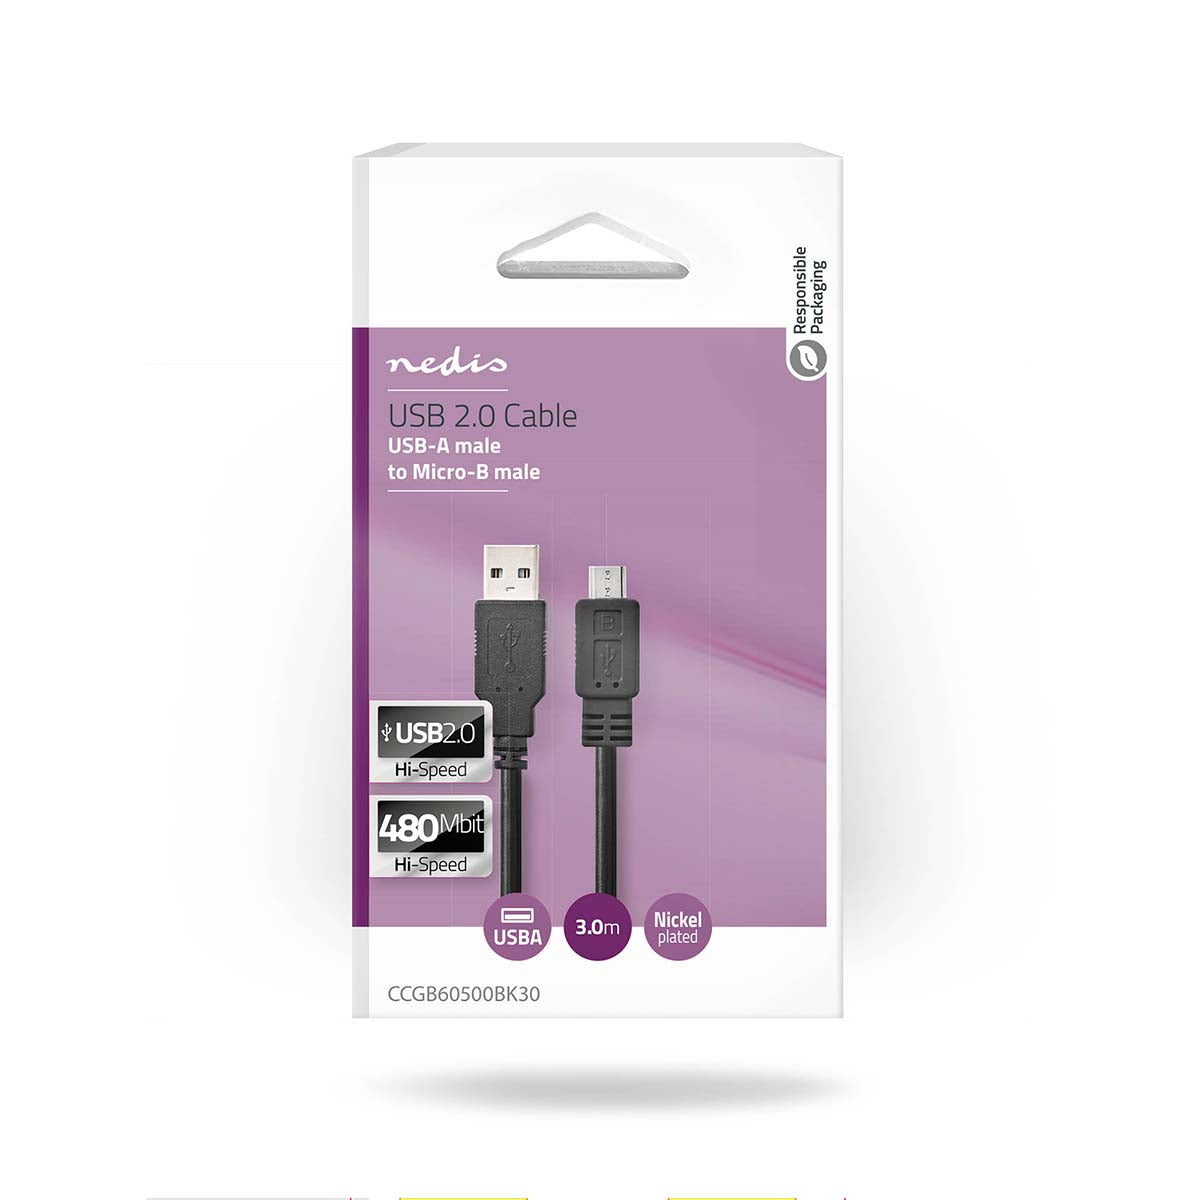 USB-Kabel | USB 2.0 | USB-A Stecker | USB Micro-B Stecker | 480 Mbps | Vernickelt | 3.00 m | Rund | PVC | Schwarz | Box